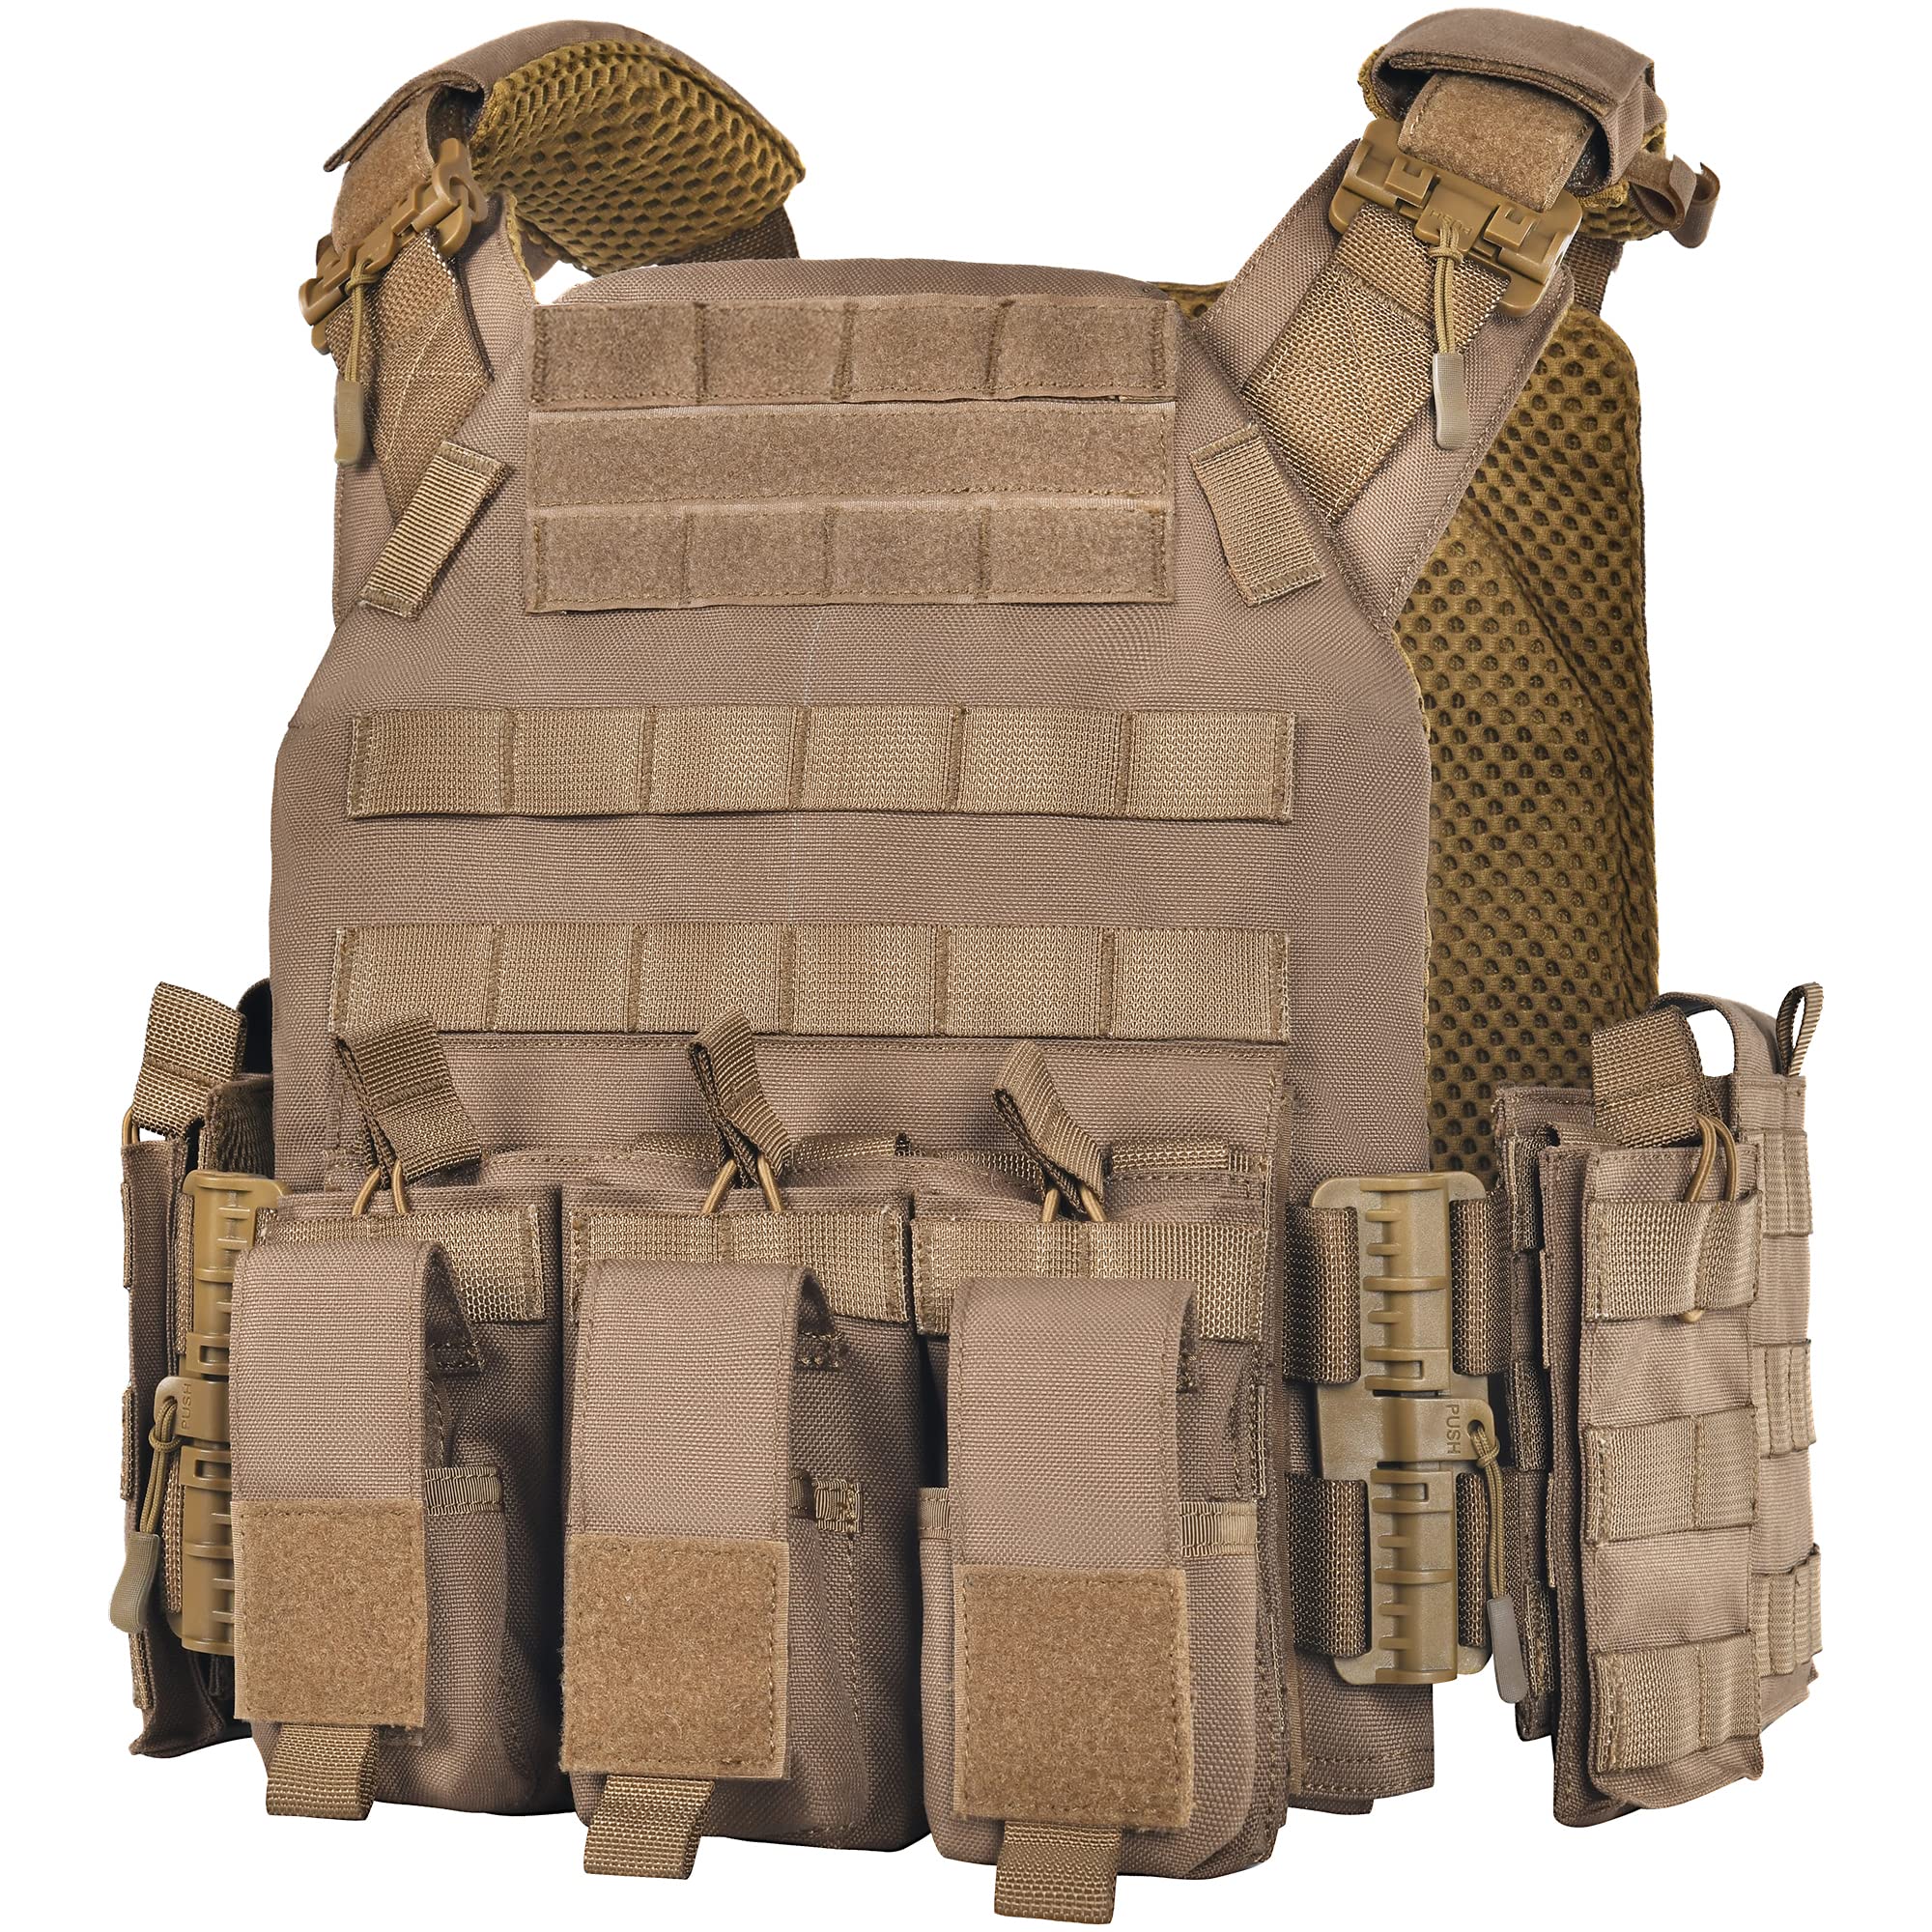 FIREGEAR Tactical Vest Weighted Vest Airsoft Vest,3D Breathable Adjustable Modular Quick Release Vest